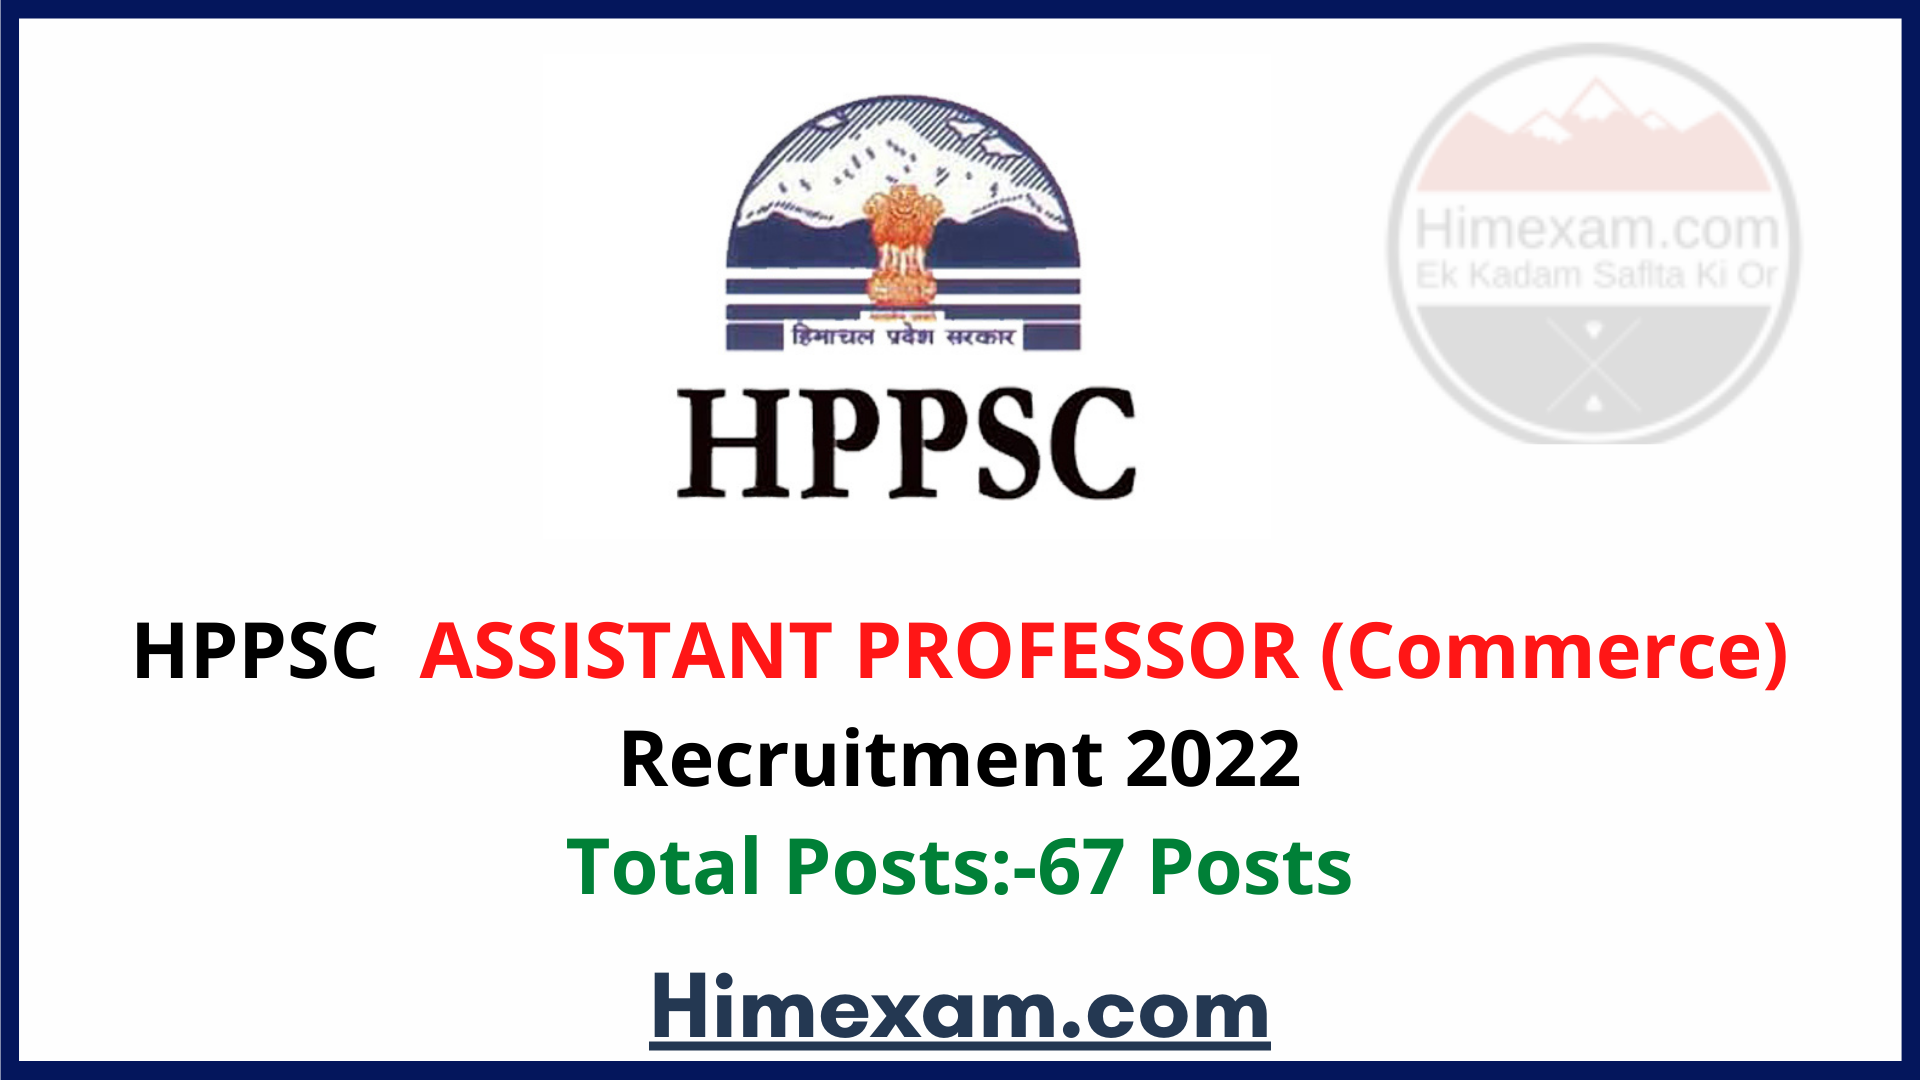 HPPSC ASSISTANT PROFESSOR (Commerce) Recruitment 2022